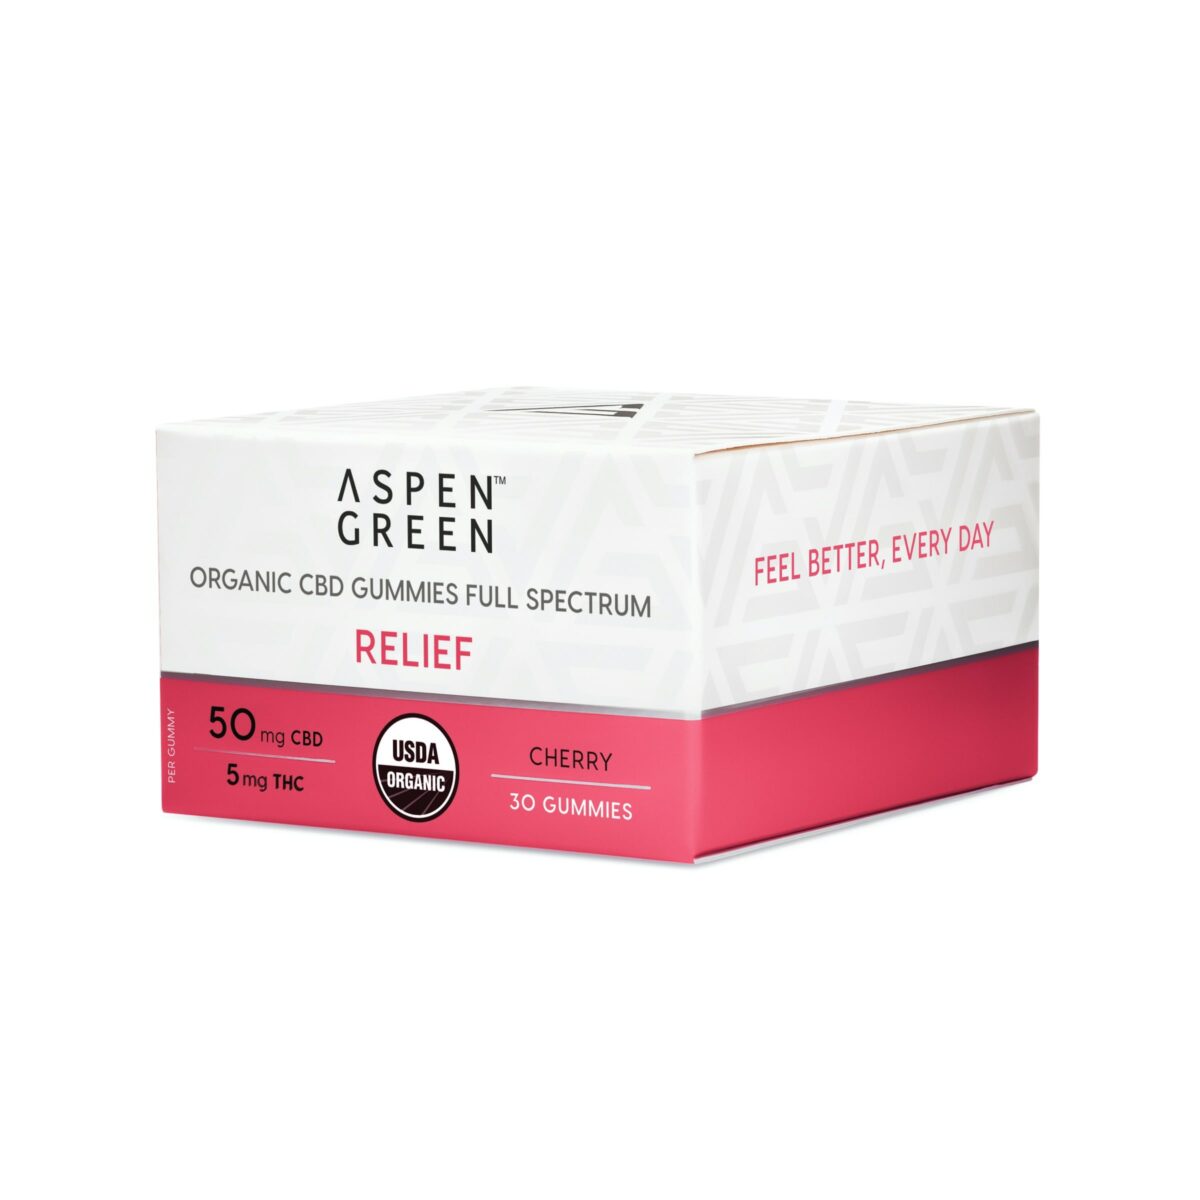 Aspen Green USDA Certified Organic CBD Gummies, Relief (50mg CBD), Cherry Flavor, 30 Gummies